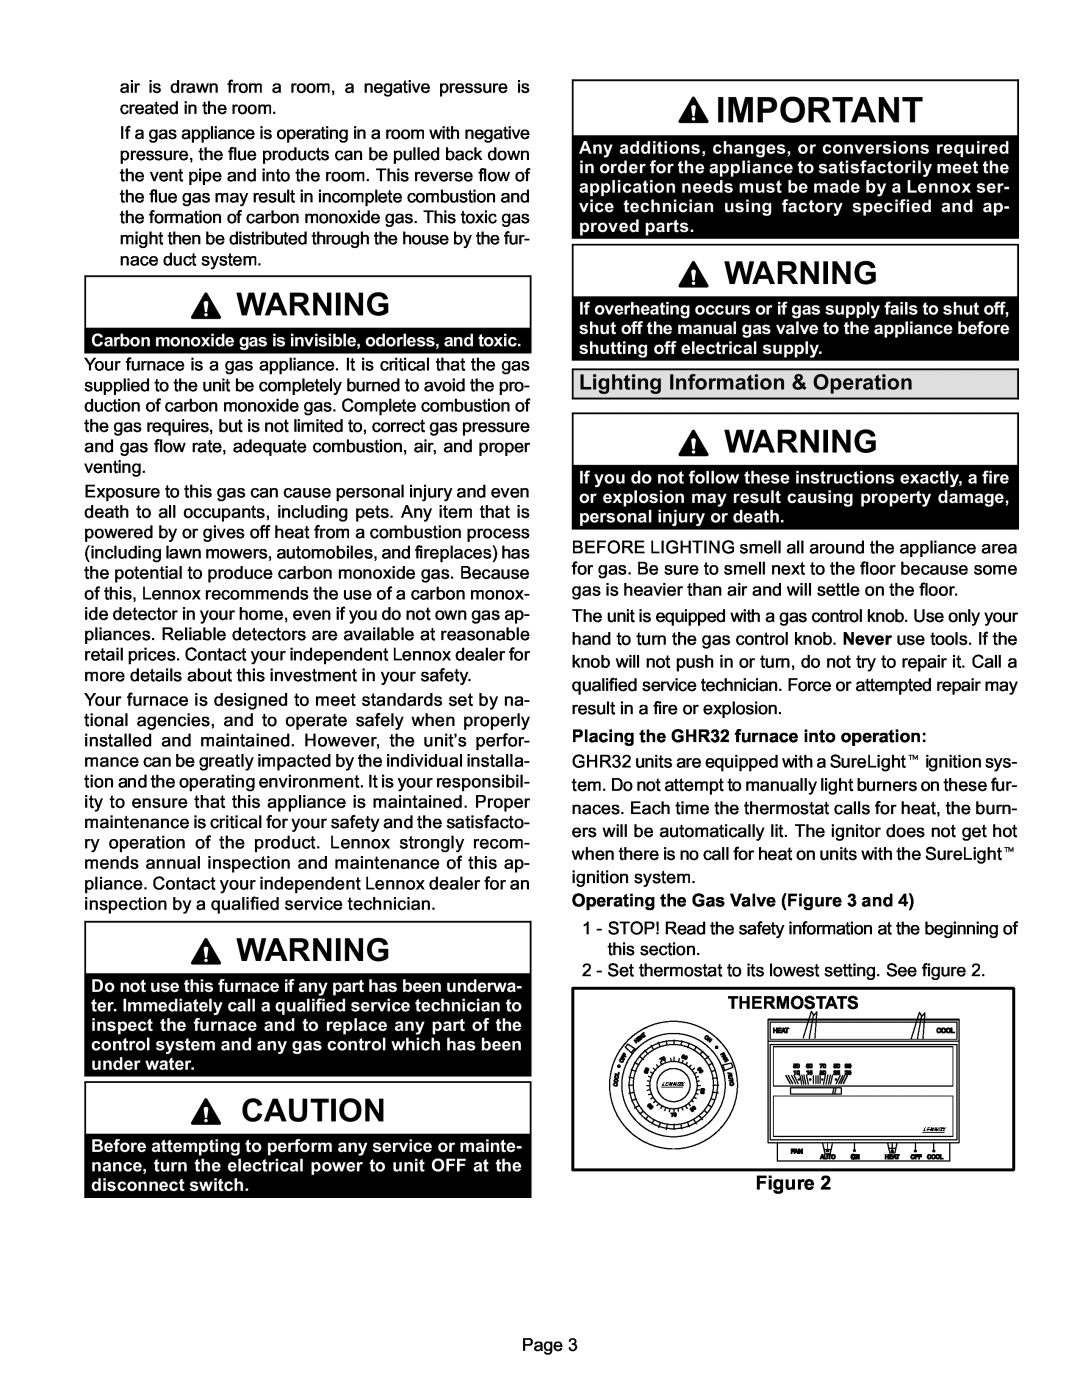 Lennox International Inc GHR32 manual Lighting Information & Operation 